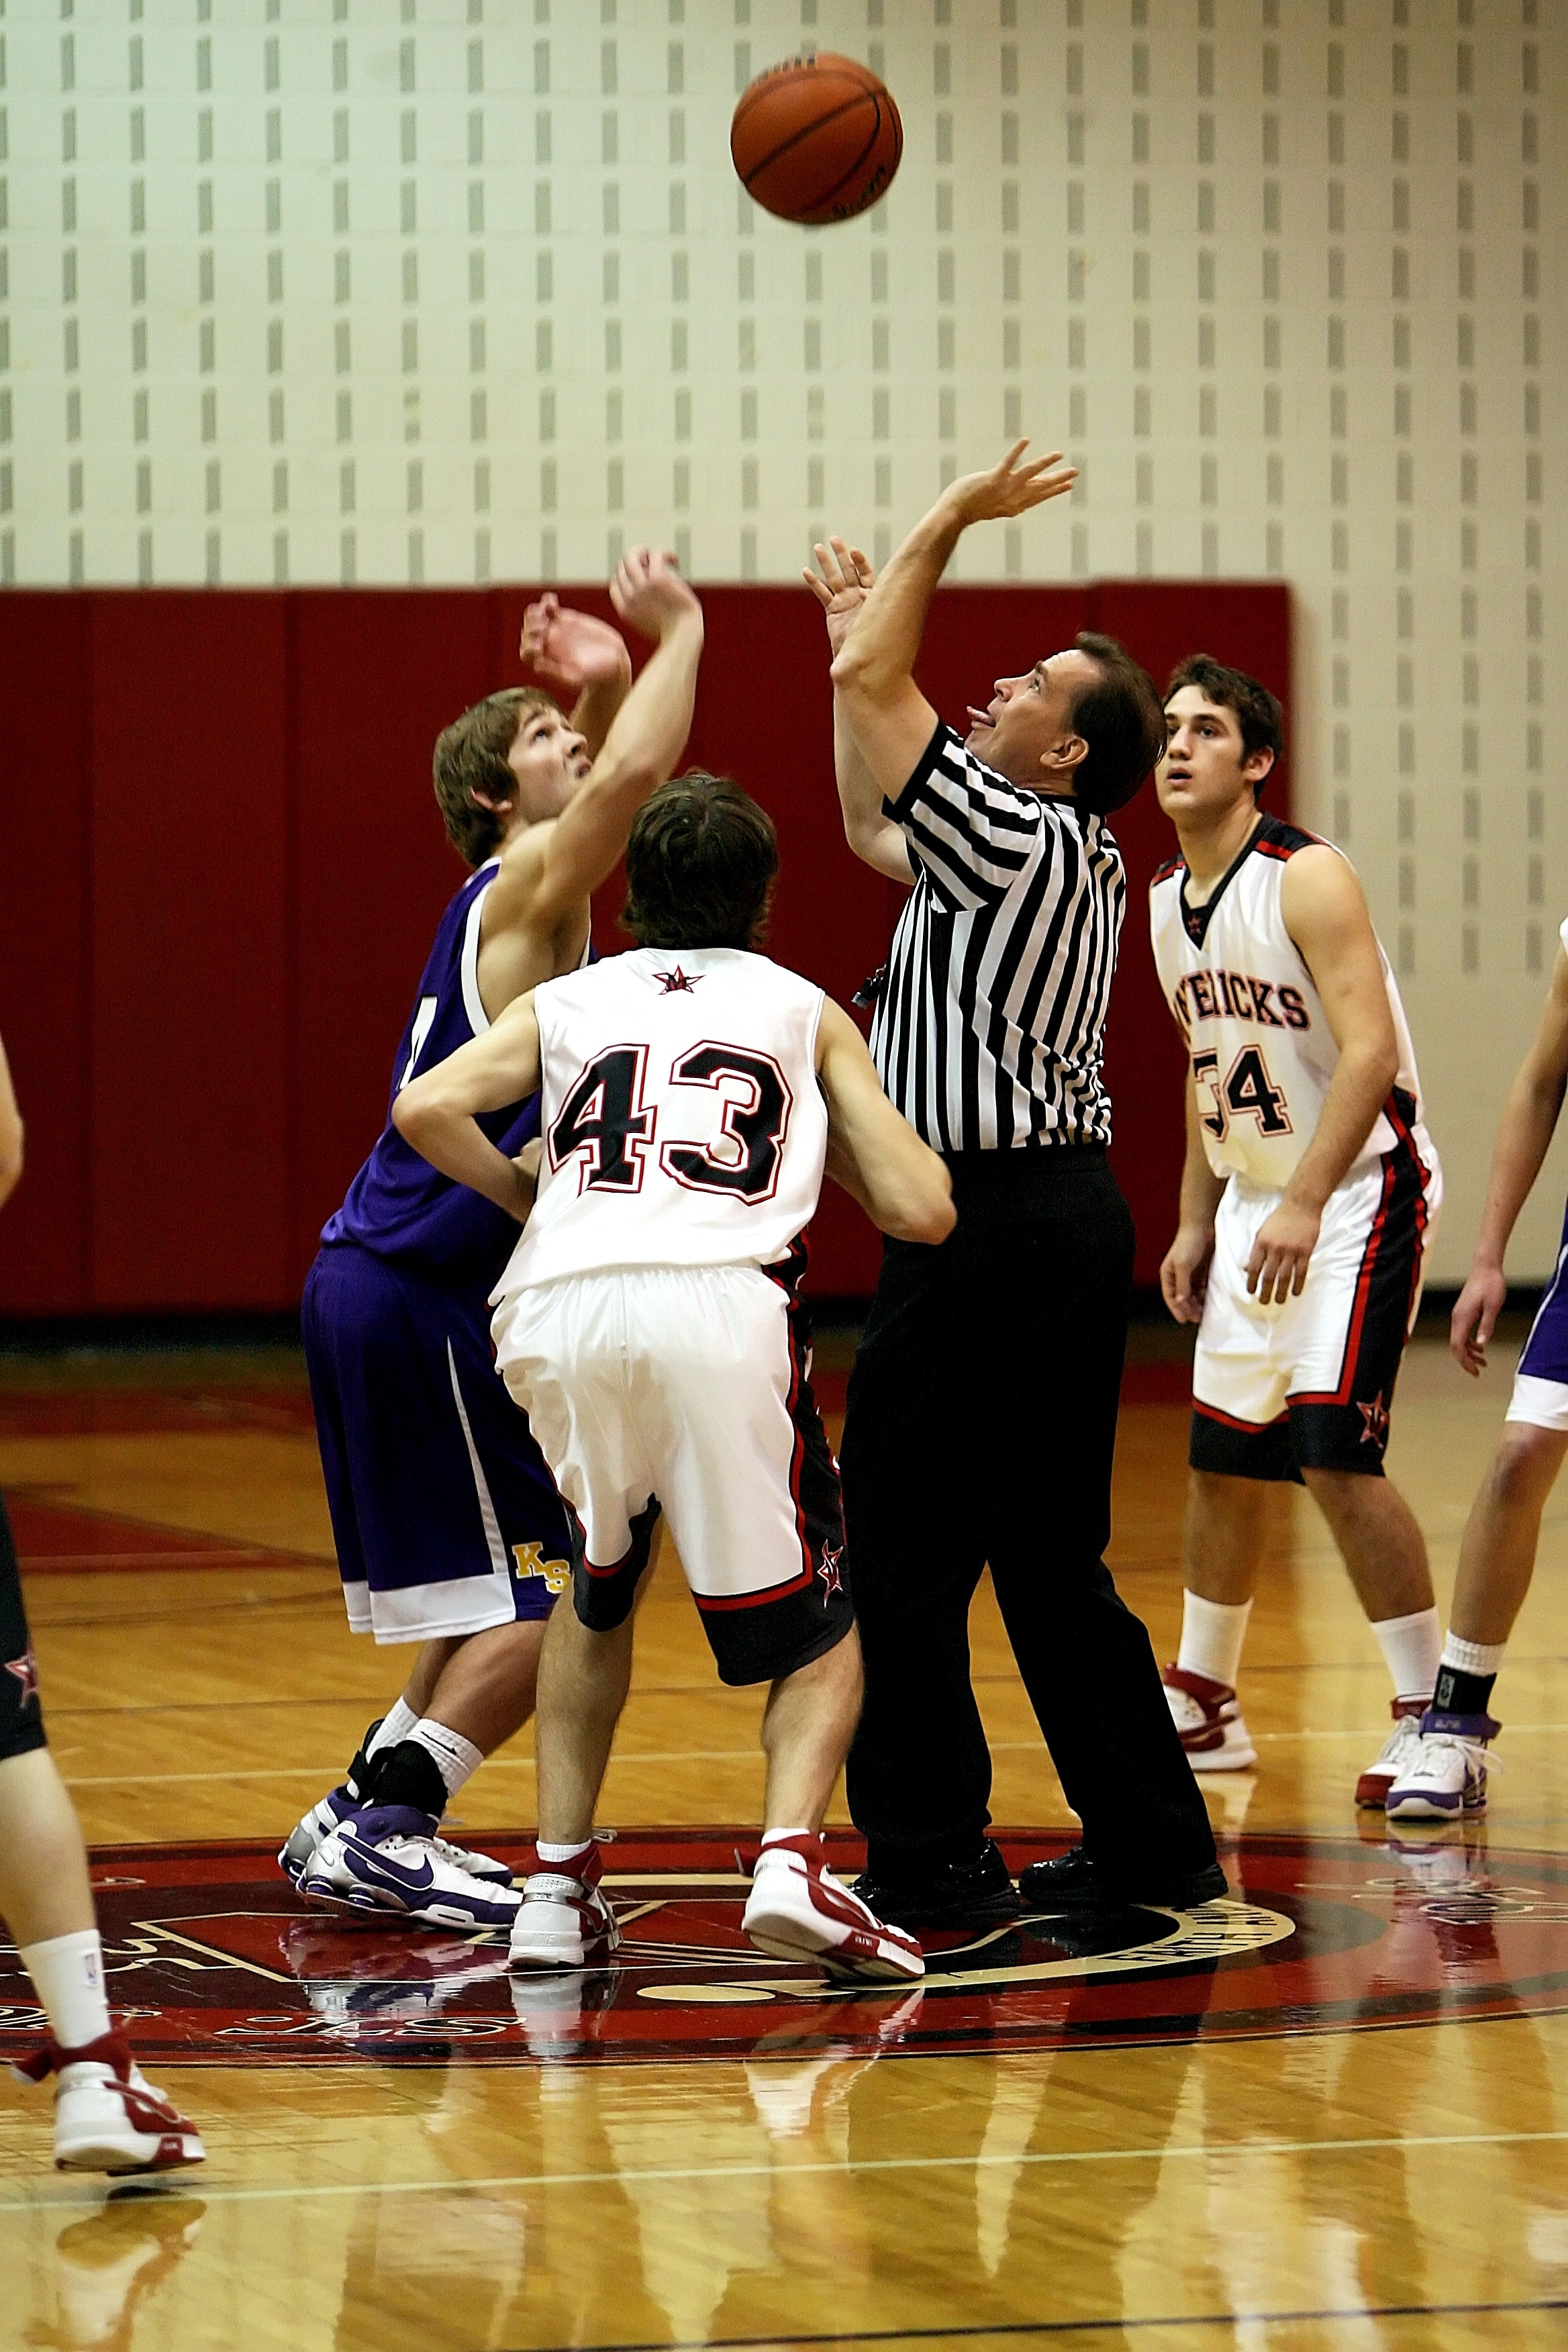 referee tossing the ball upward jumpball basketball game